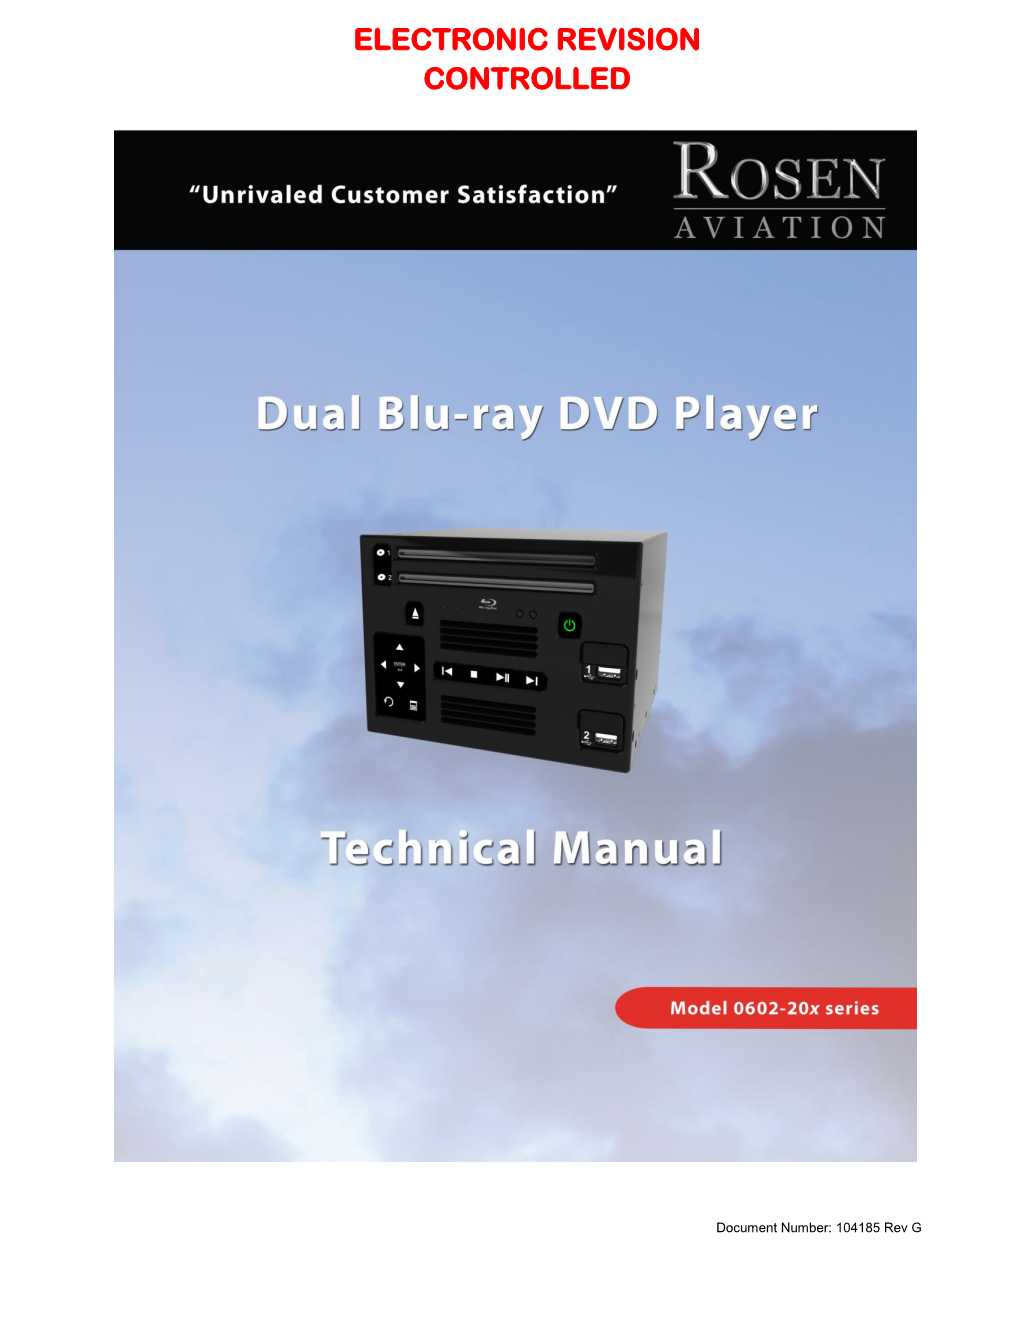 Dual Blu-Ray DVD Player Technical Manual